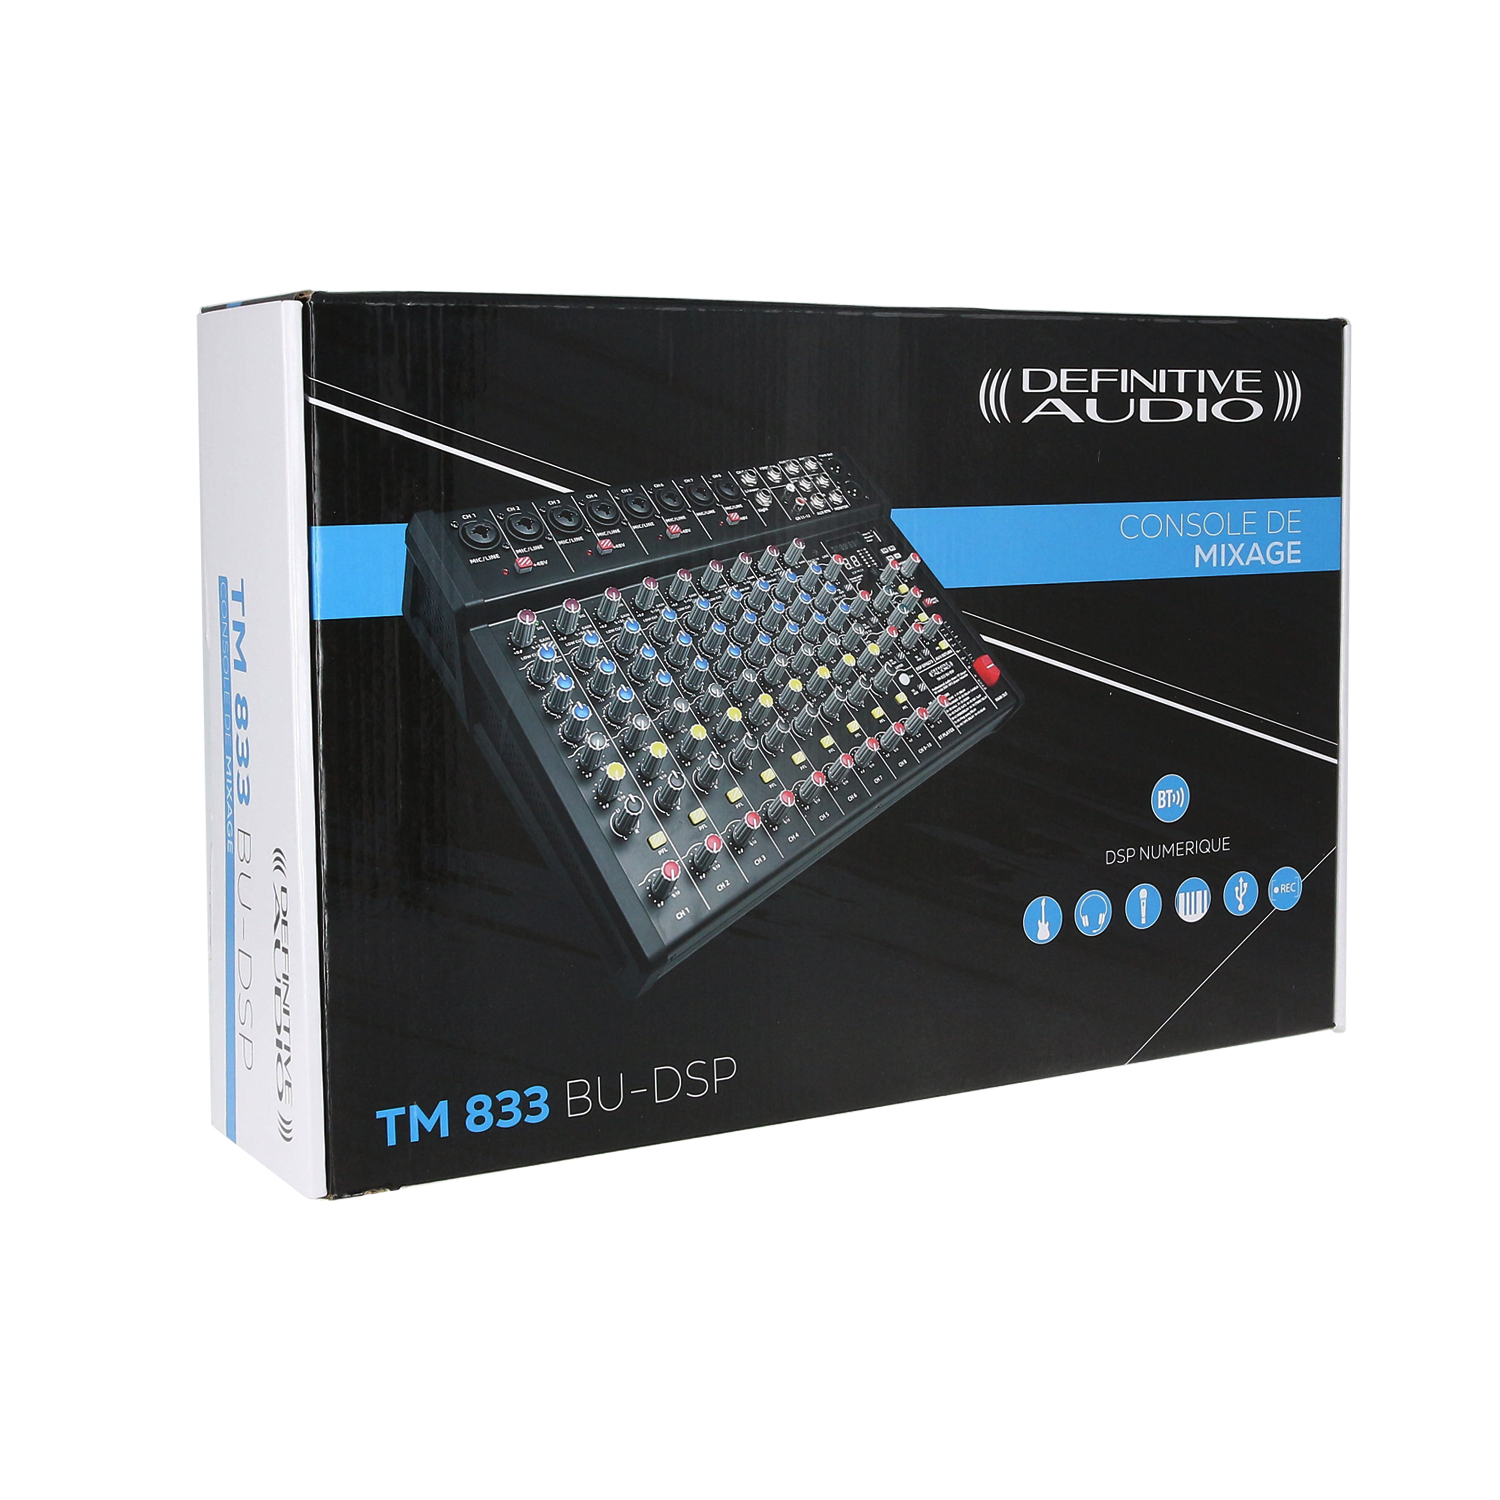 Definitive Audio Tm 833 Bu-dsp - Mesa de mezcla analógica - Variation 7